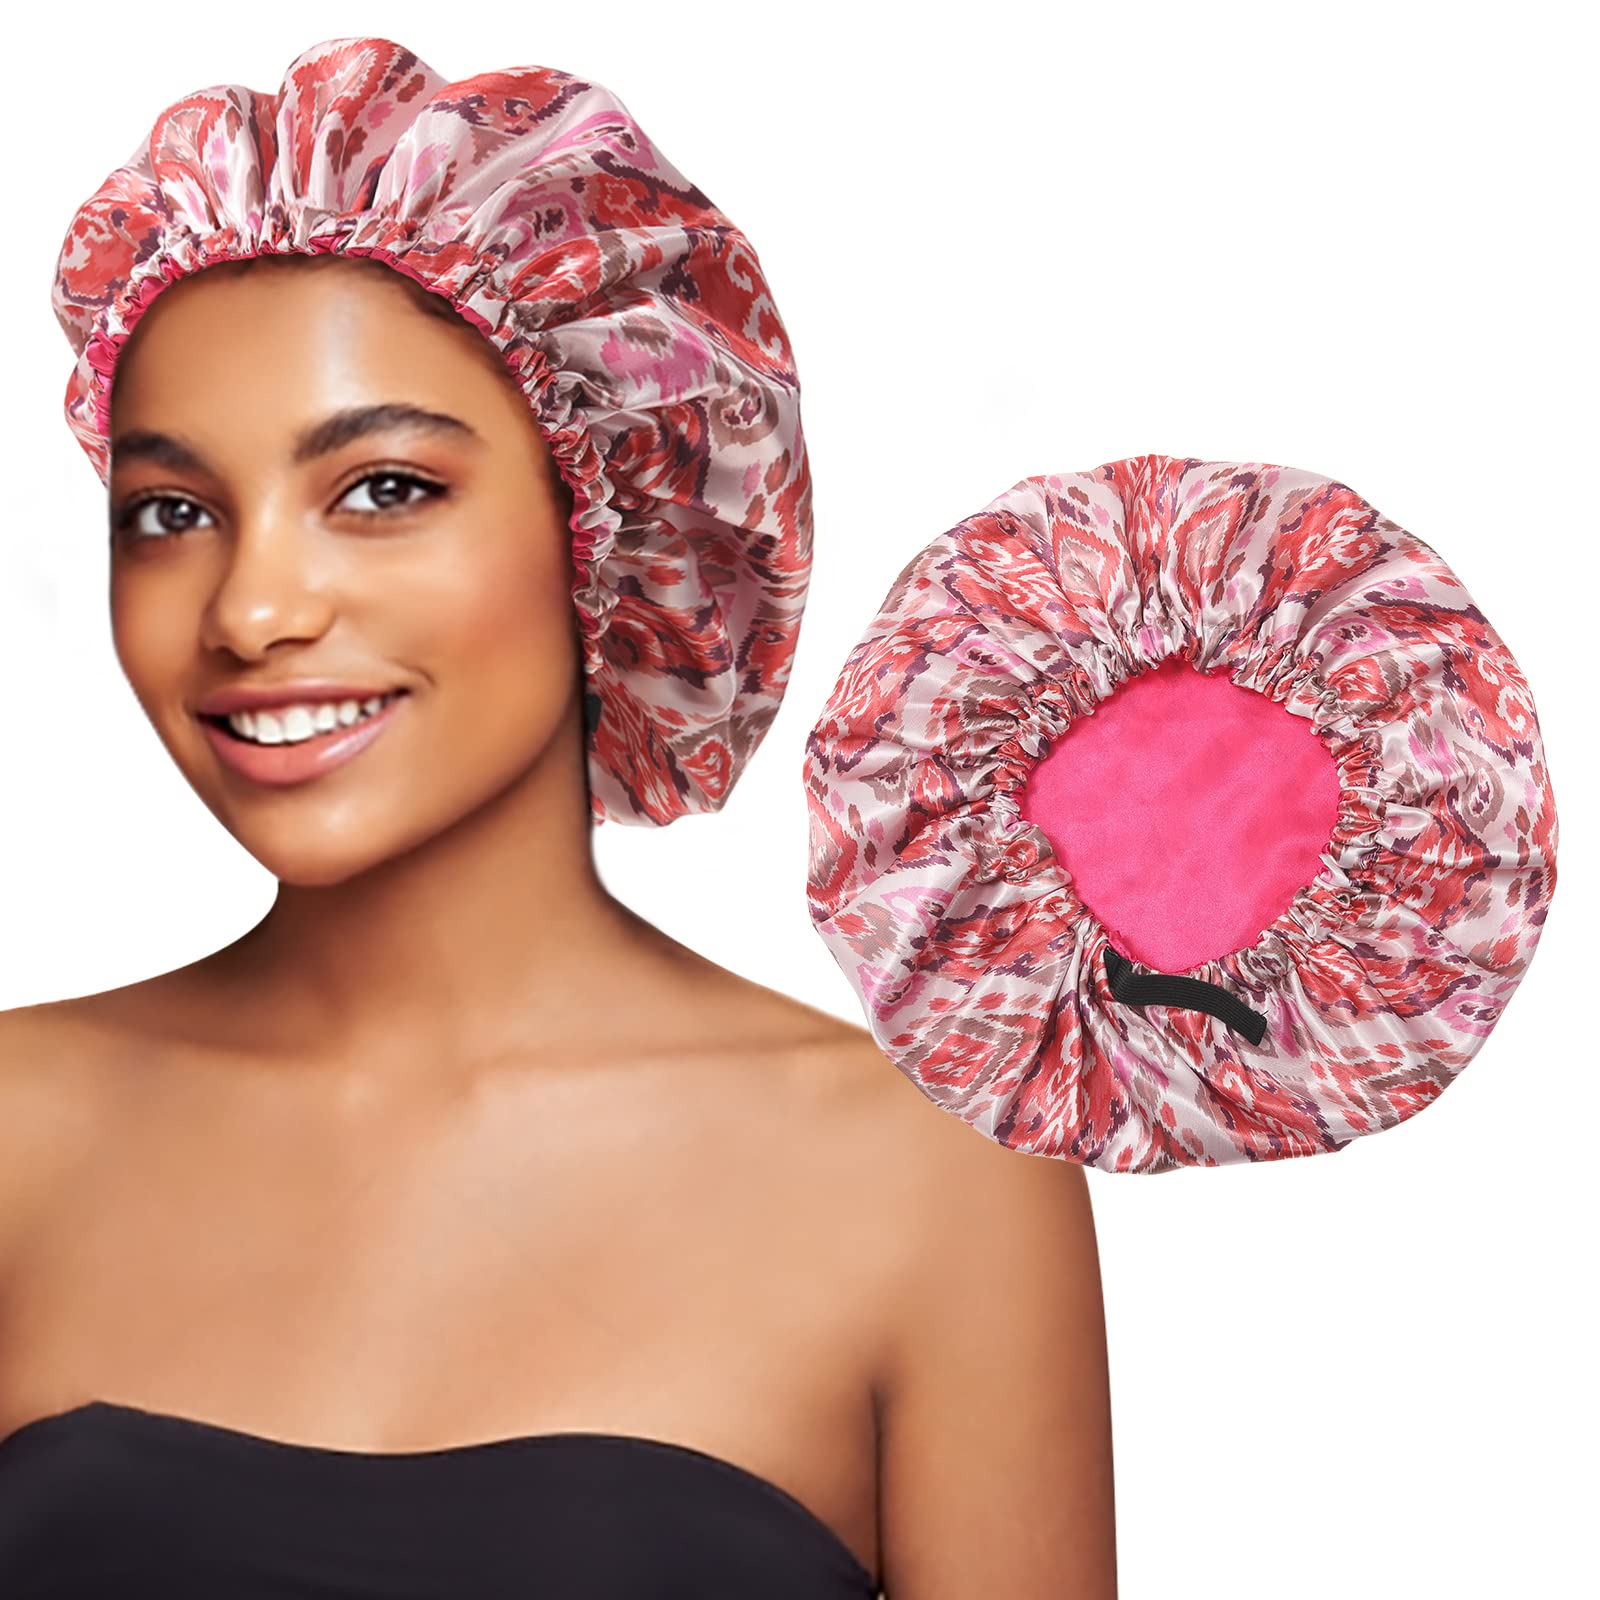 Satin Bonnet Silk Sleeping Cap - Silk Like Hair Wrap for Sleeping Large Reversible Hair Cap for Curly Hair Satin Bonnet for Women and Girls (Pink)